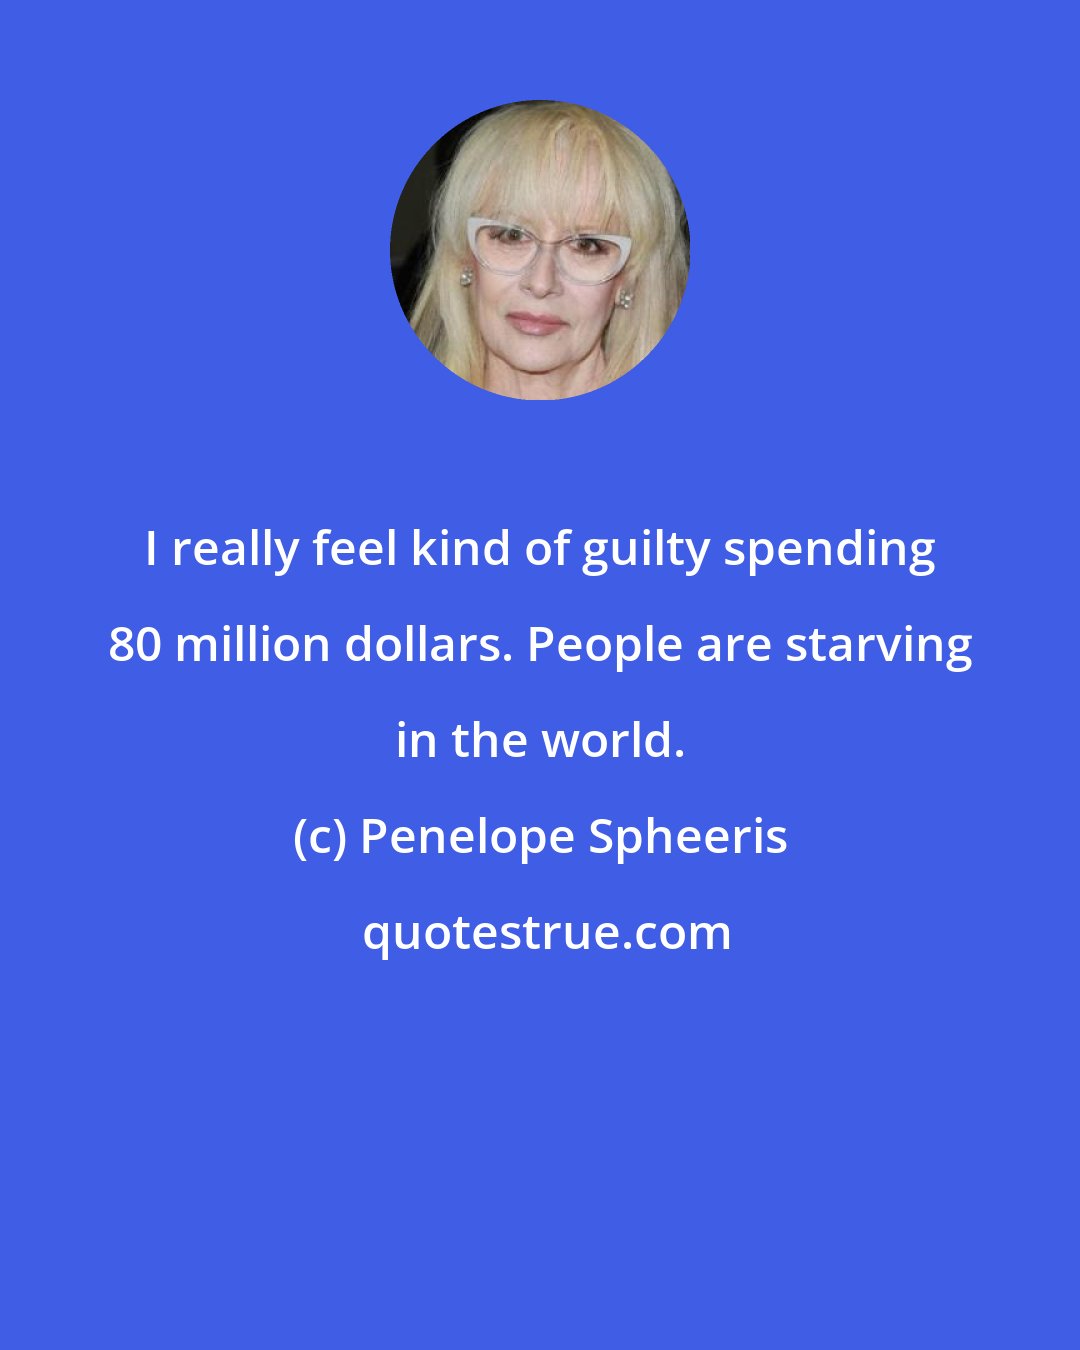 Penelope Spheeris: I really feel kind of guilty spending 80 million dollars. People are starving in the world.